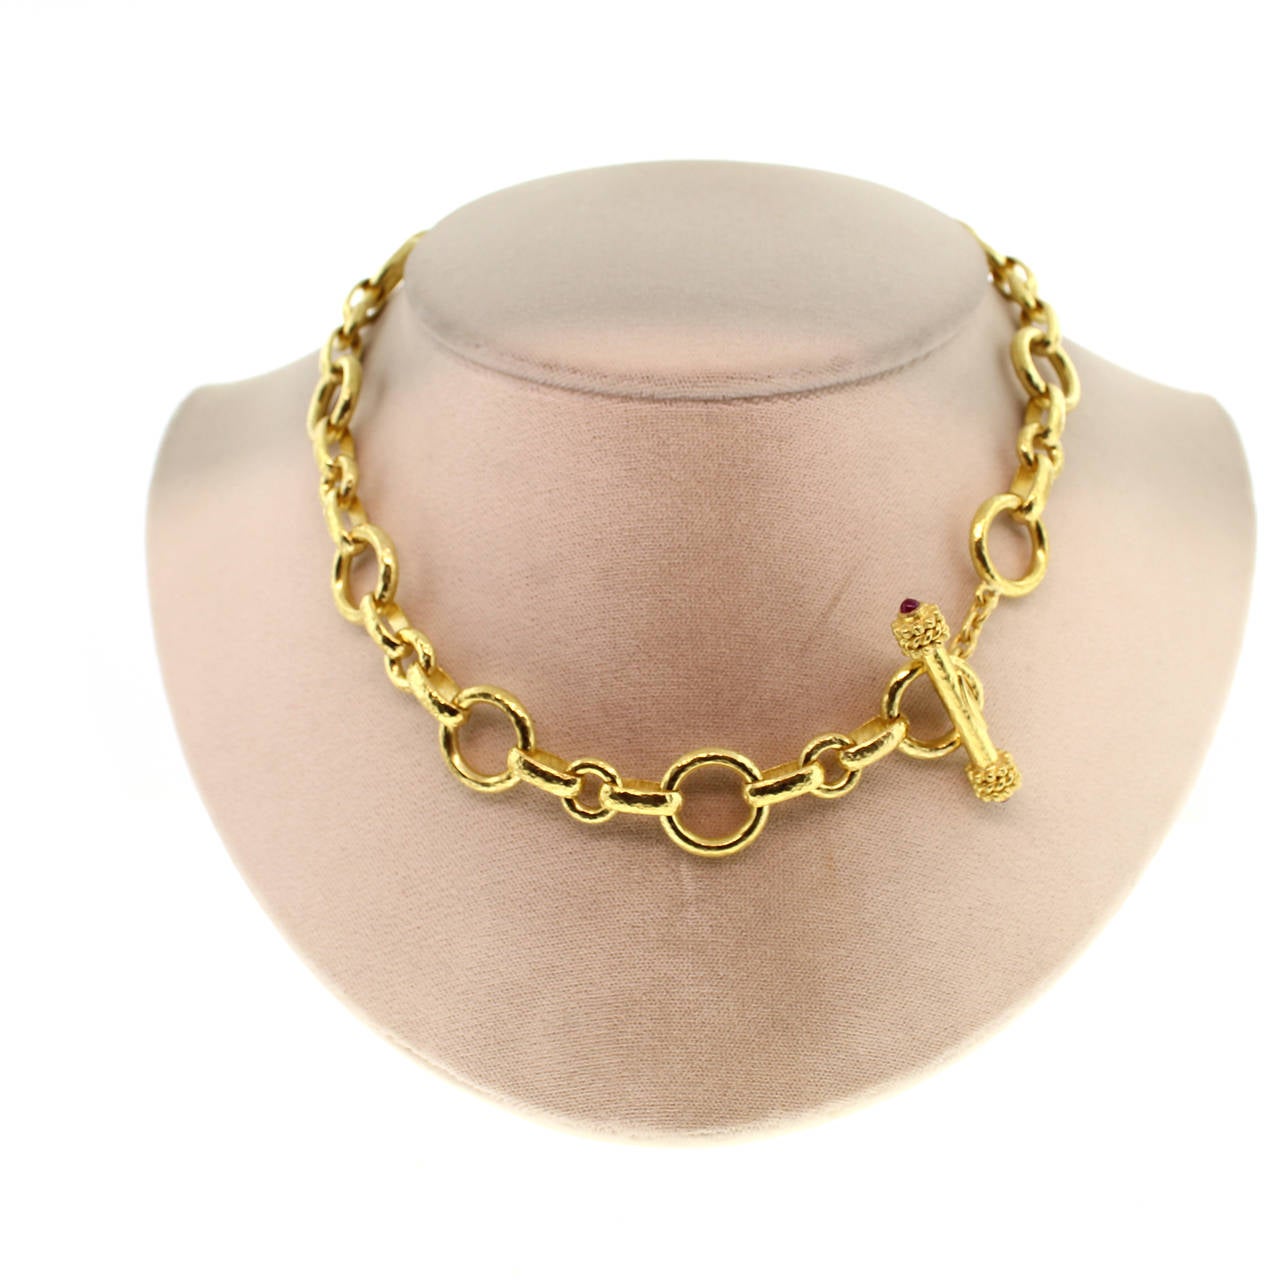 19 Karat gold alternating round link necklace by Elizabeth Locke, 91 grams